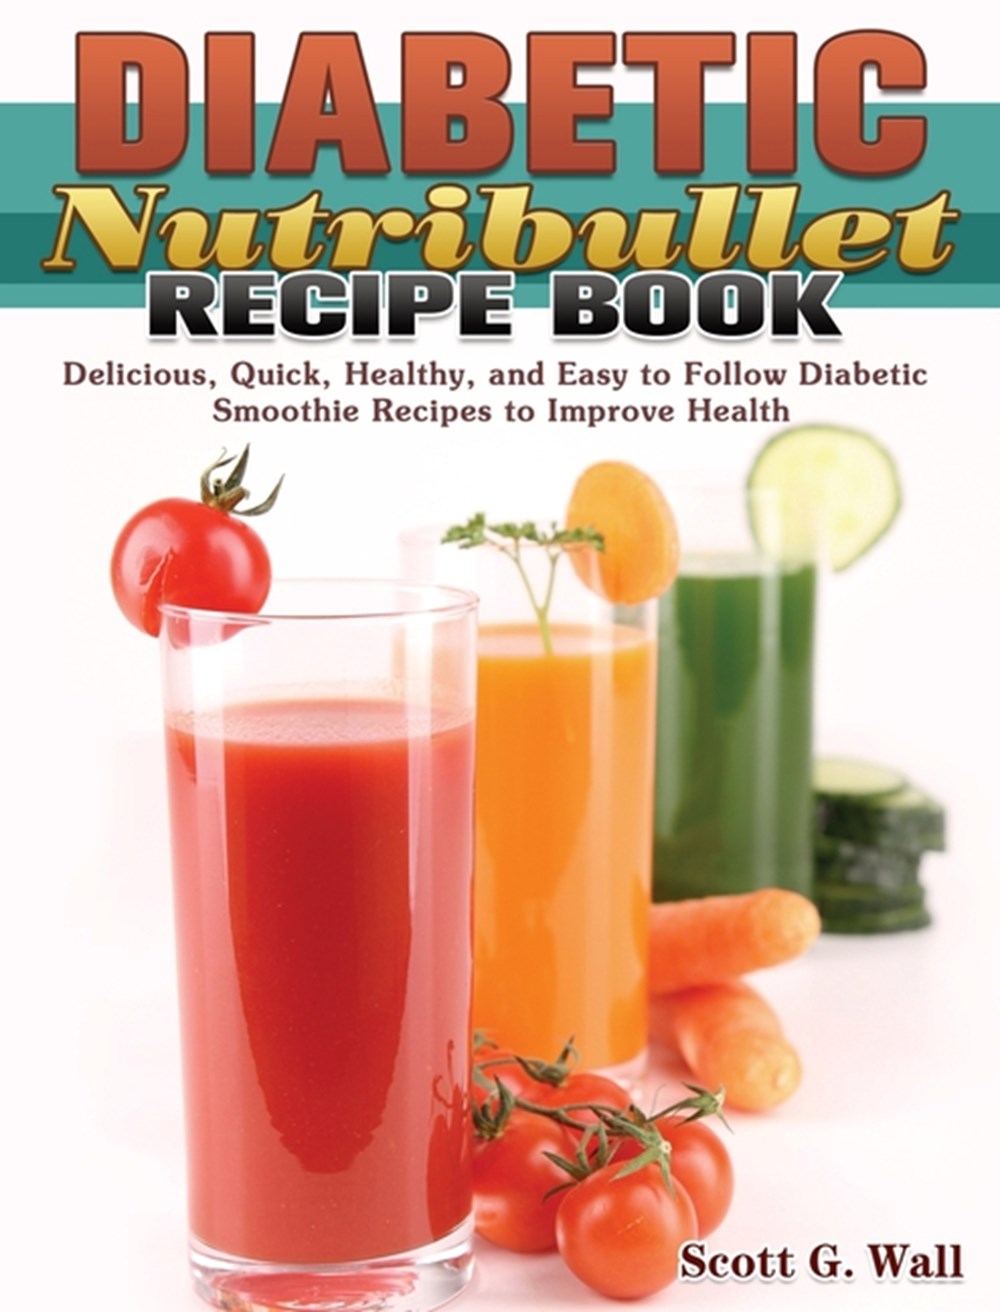 Buy Diabetic Nutribullet Recipe Book Delicious, Quick, Healthy, and